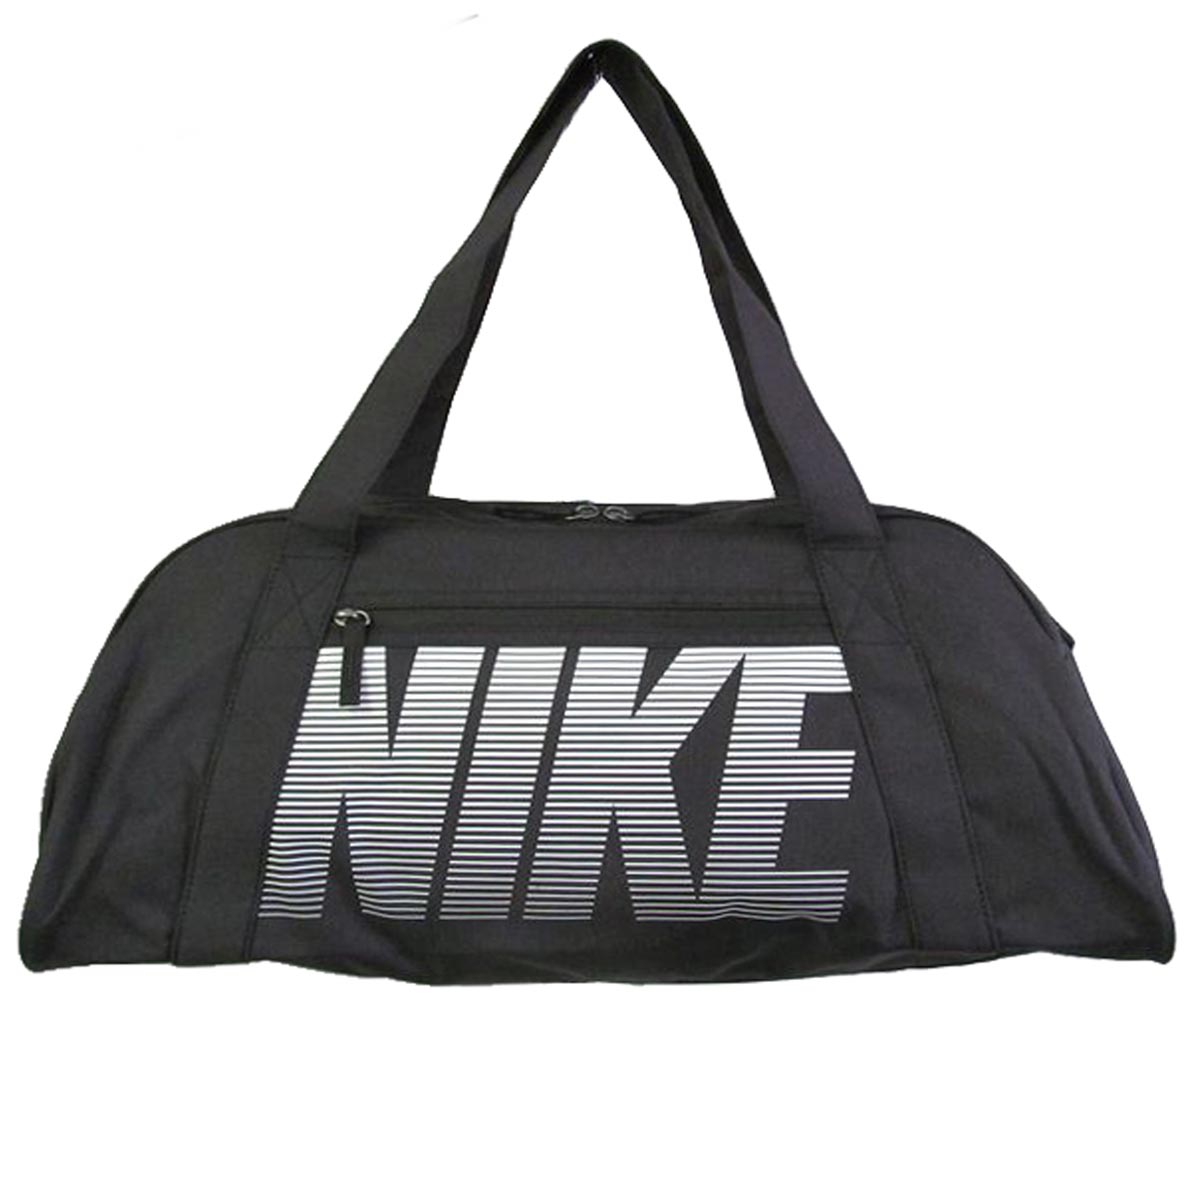 Buy Nike Gym Club Duffle Bag (Dark Grey) Online at Lowest Price in India